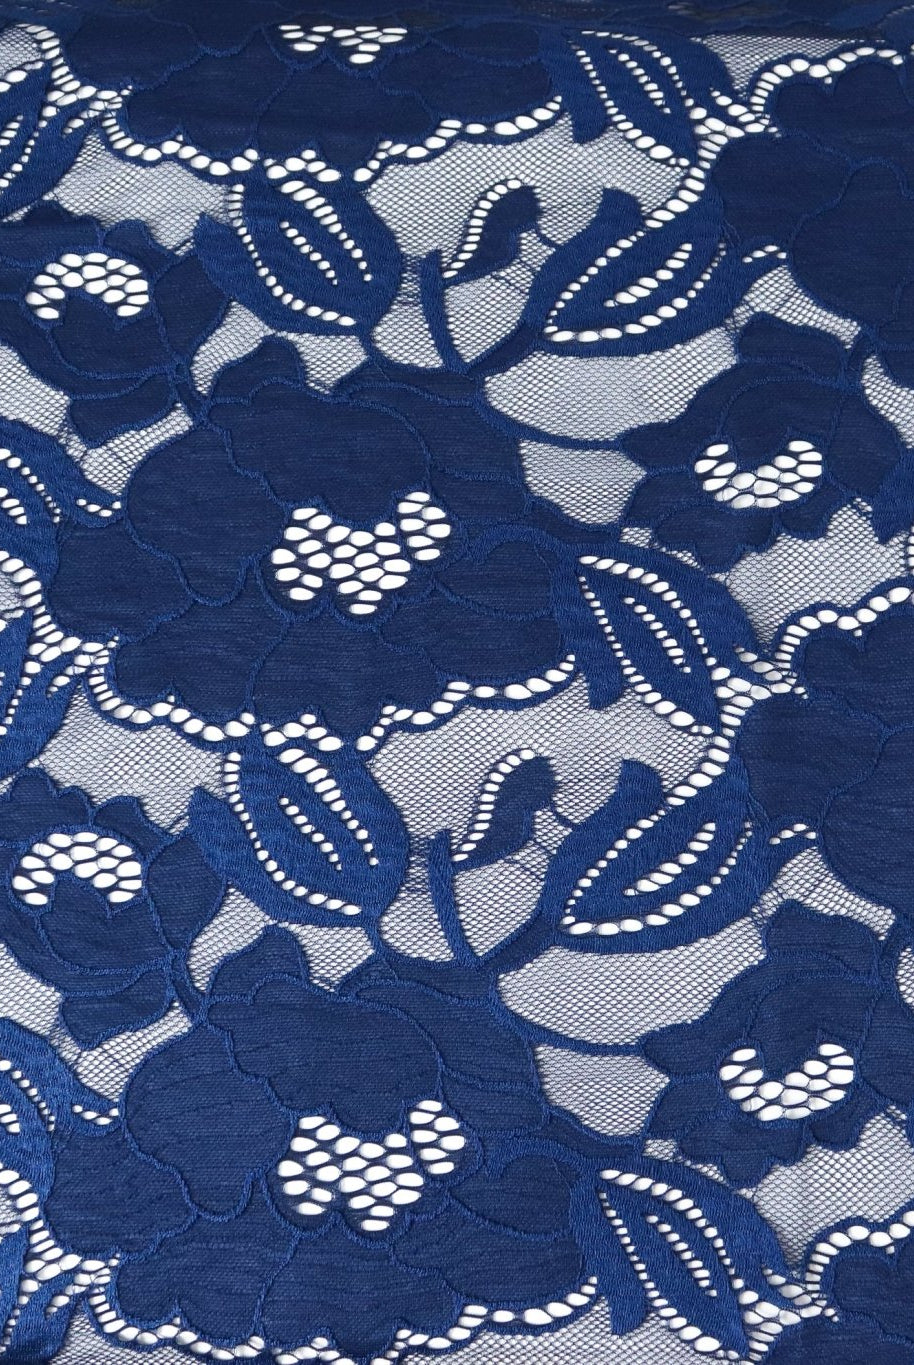 Peony Petals in Blue. Stretch Lace Fabric. SL-127-BLU - Boho Fabrics